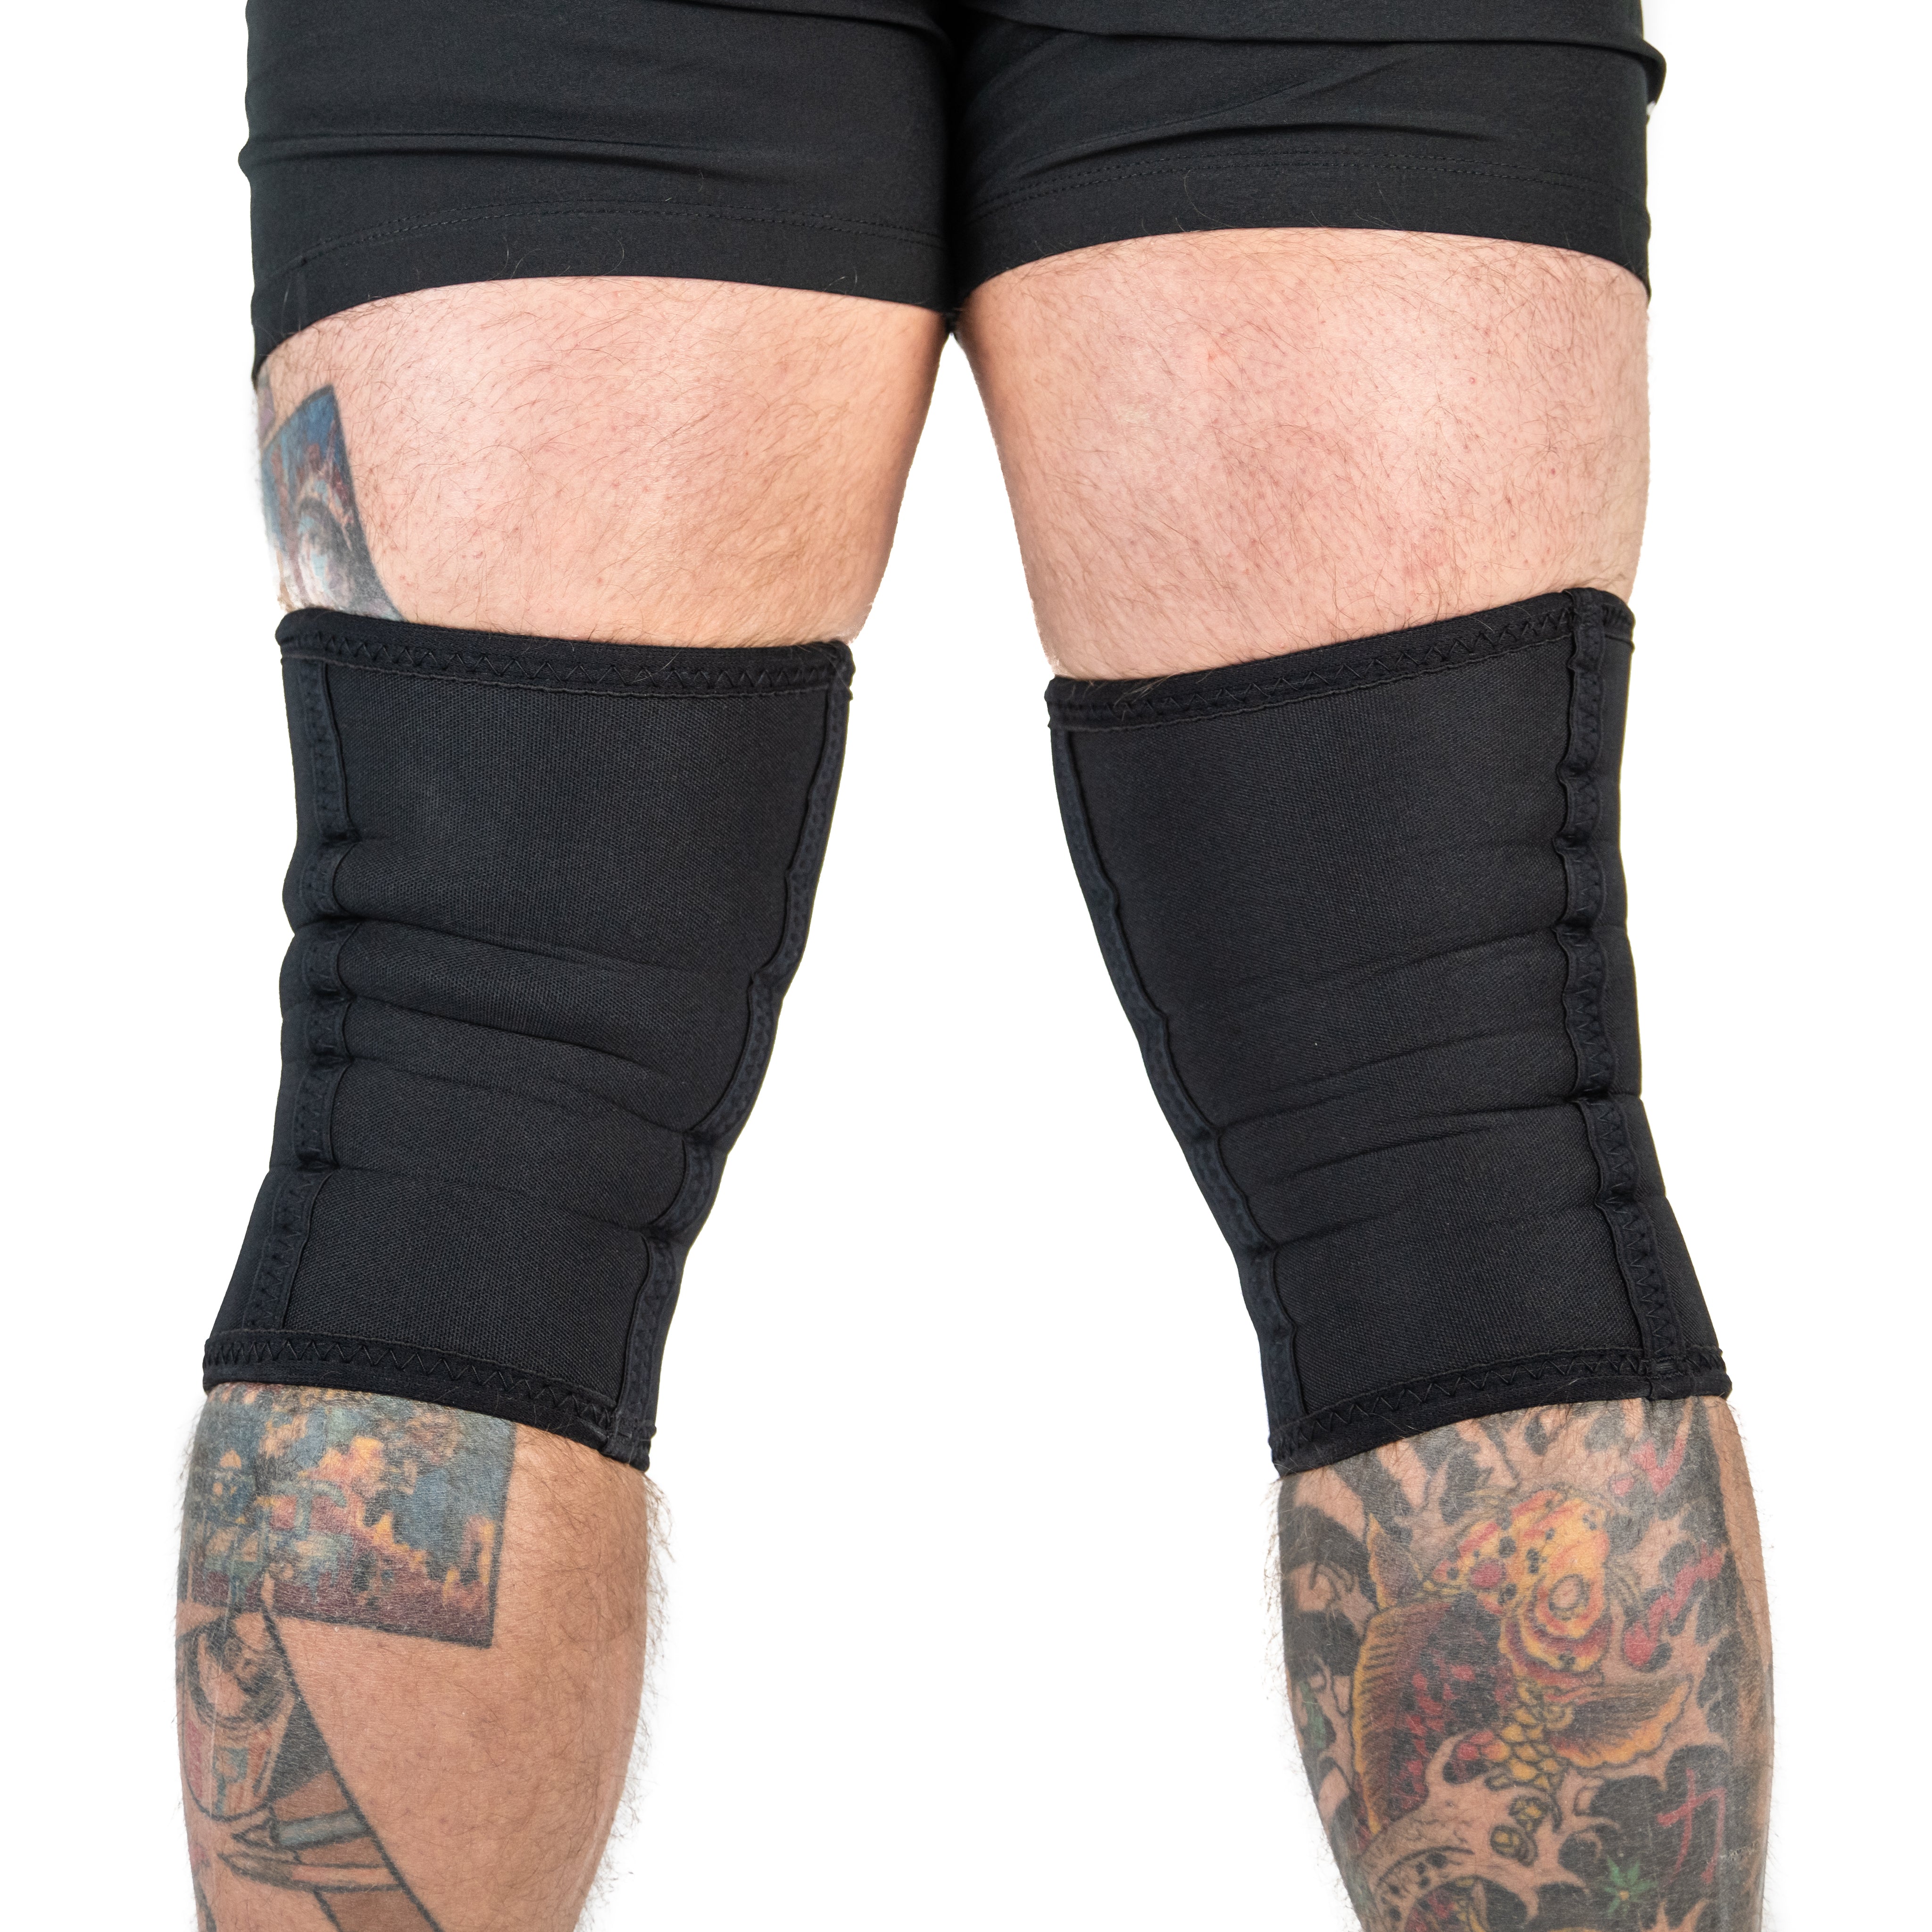 Jordan Padded Knee Sleeve Large/ExtraLarge Black